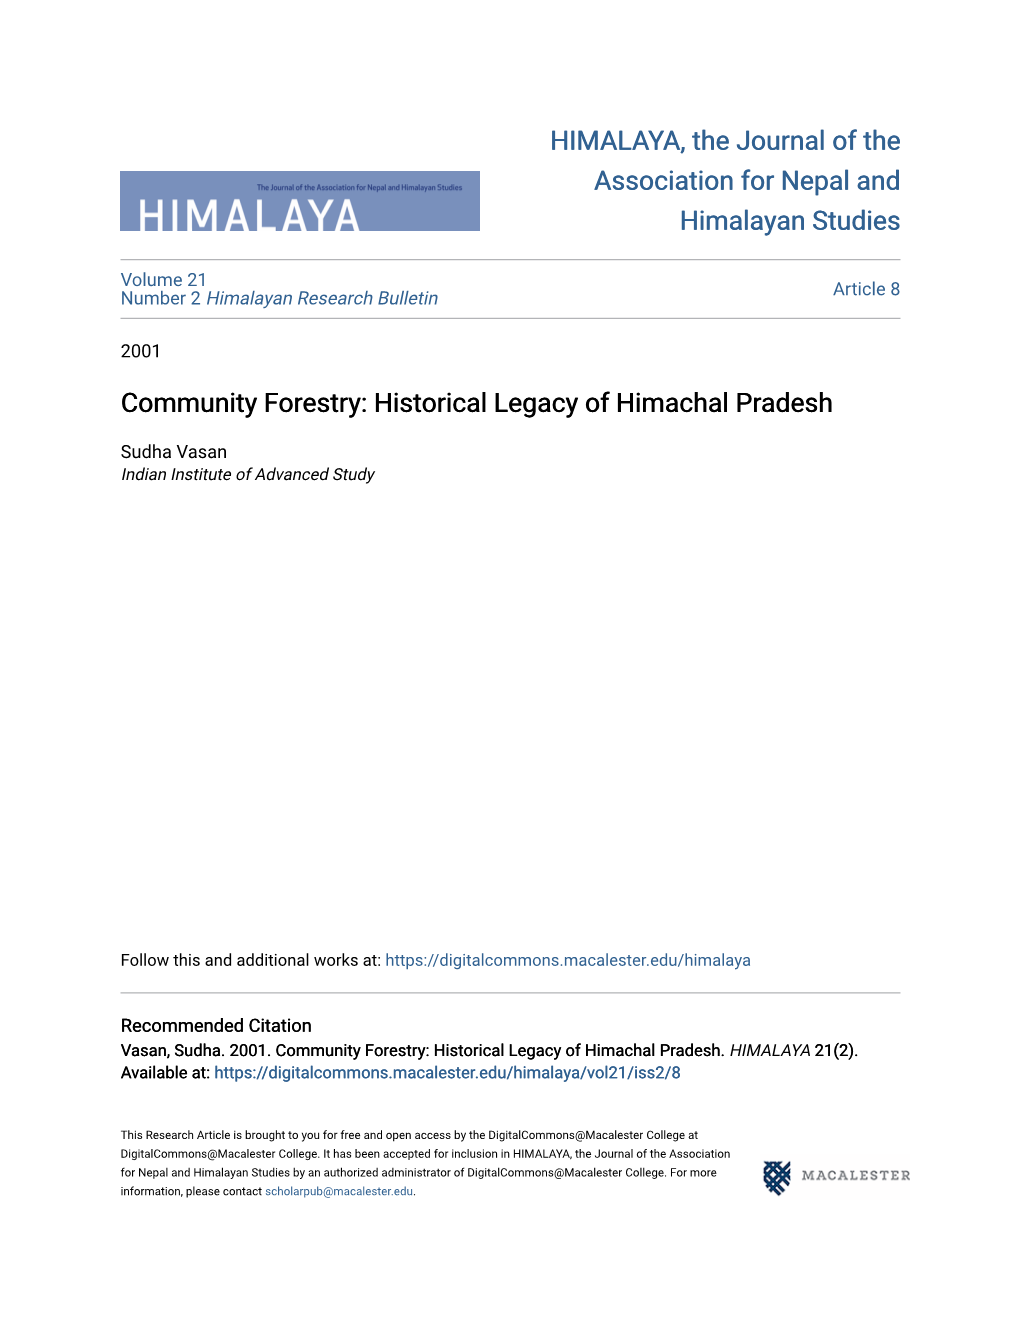 Historical Legacy of Himachal Pradesh